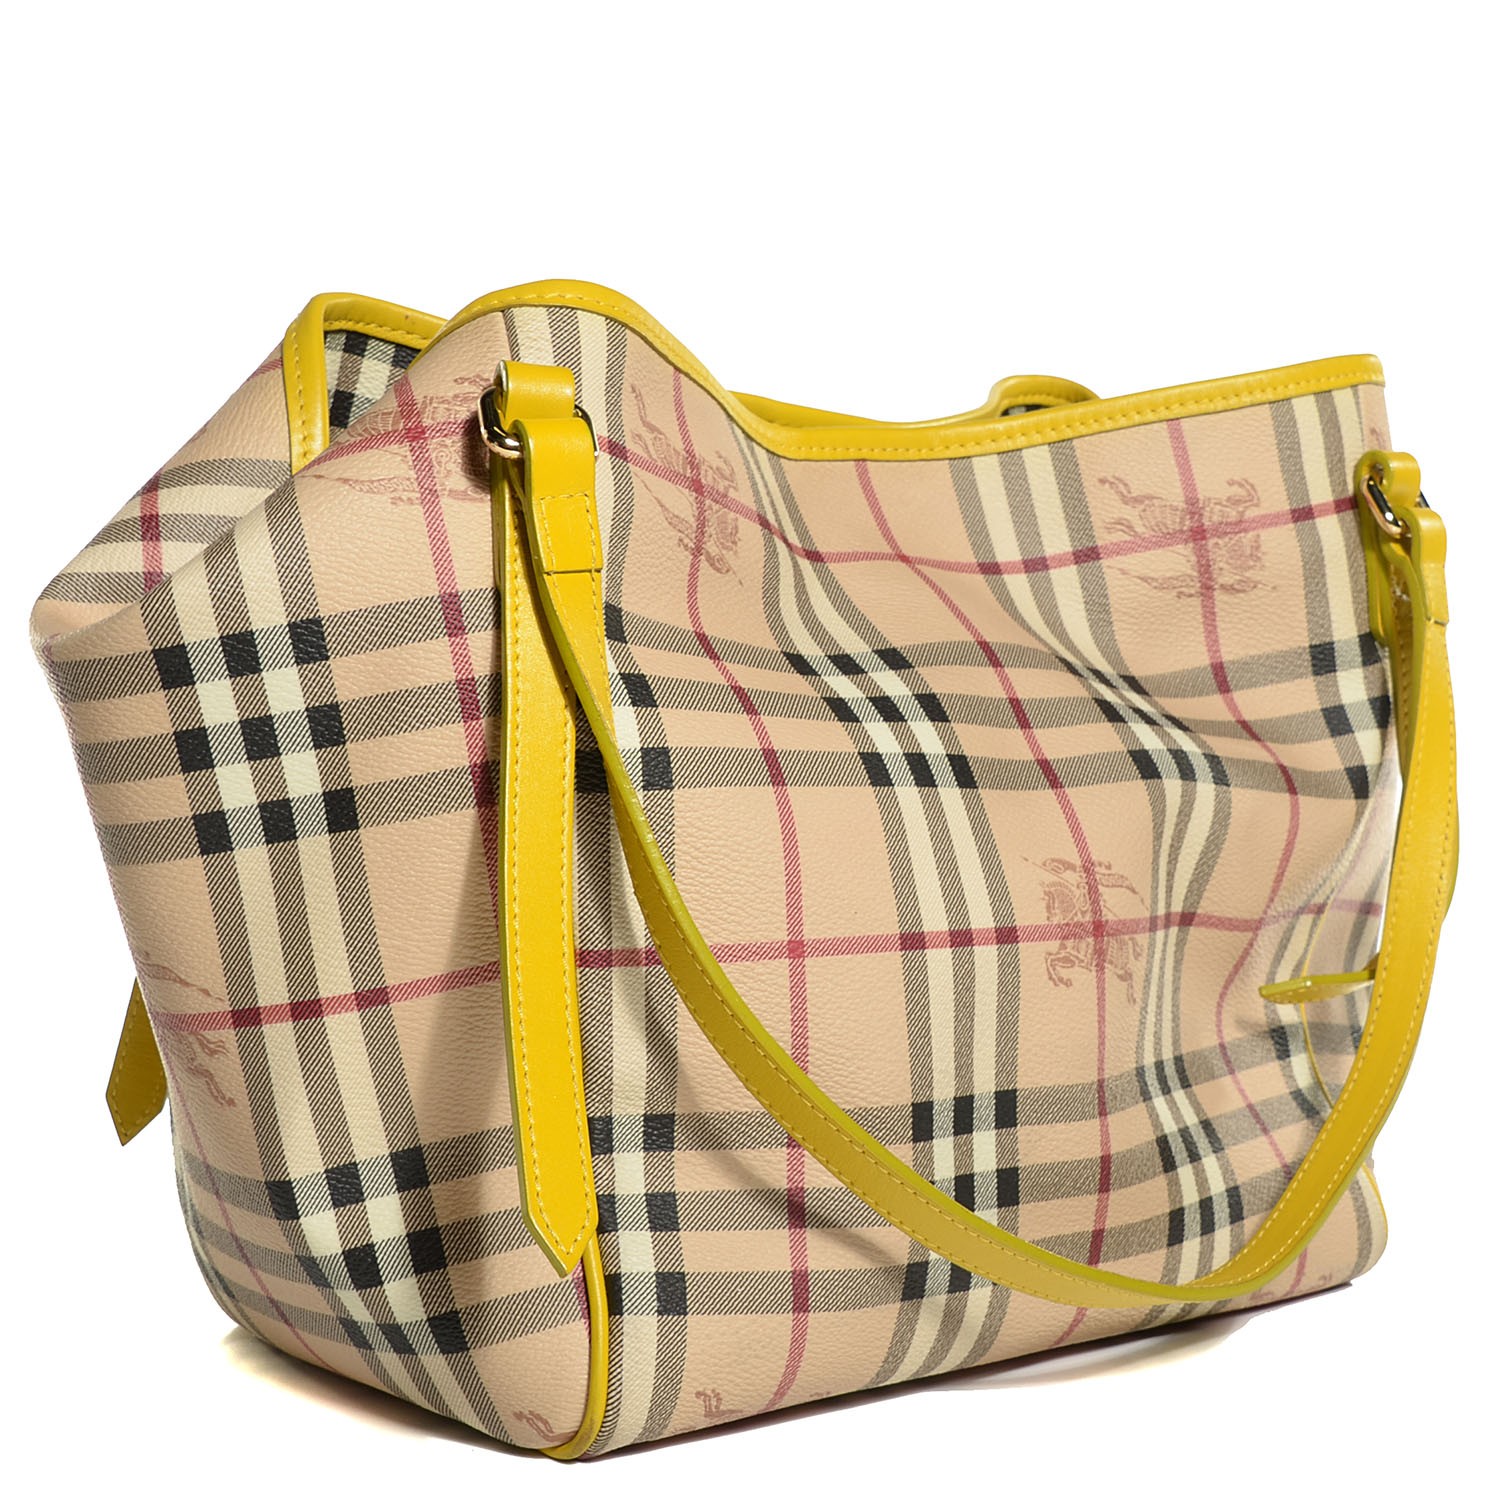 burberry handbags yellow